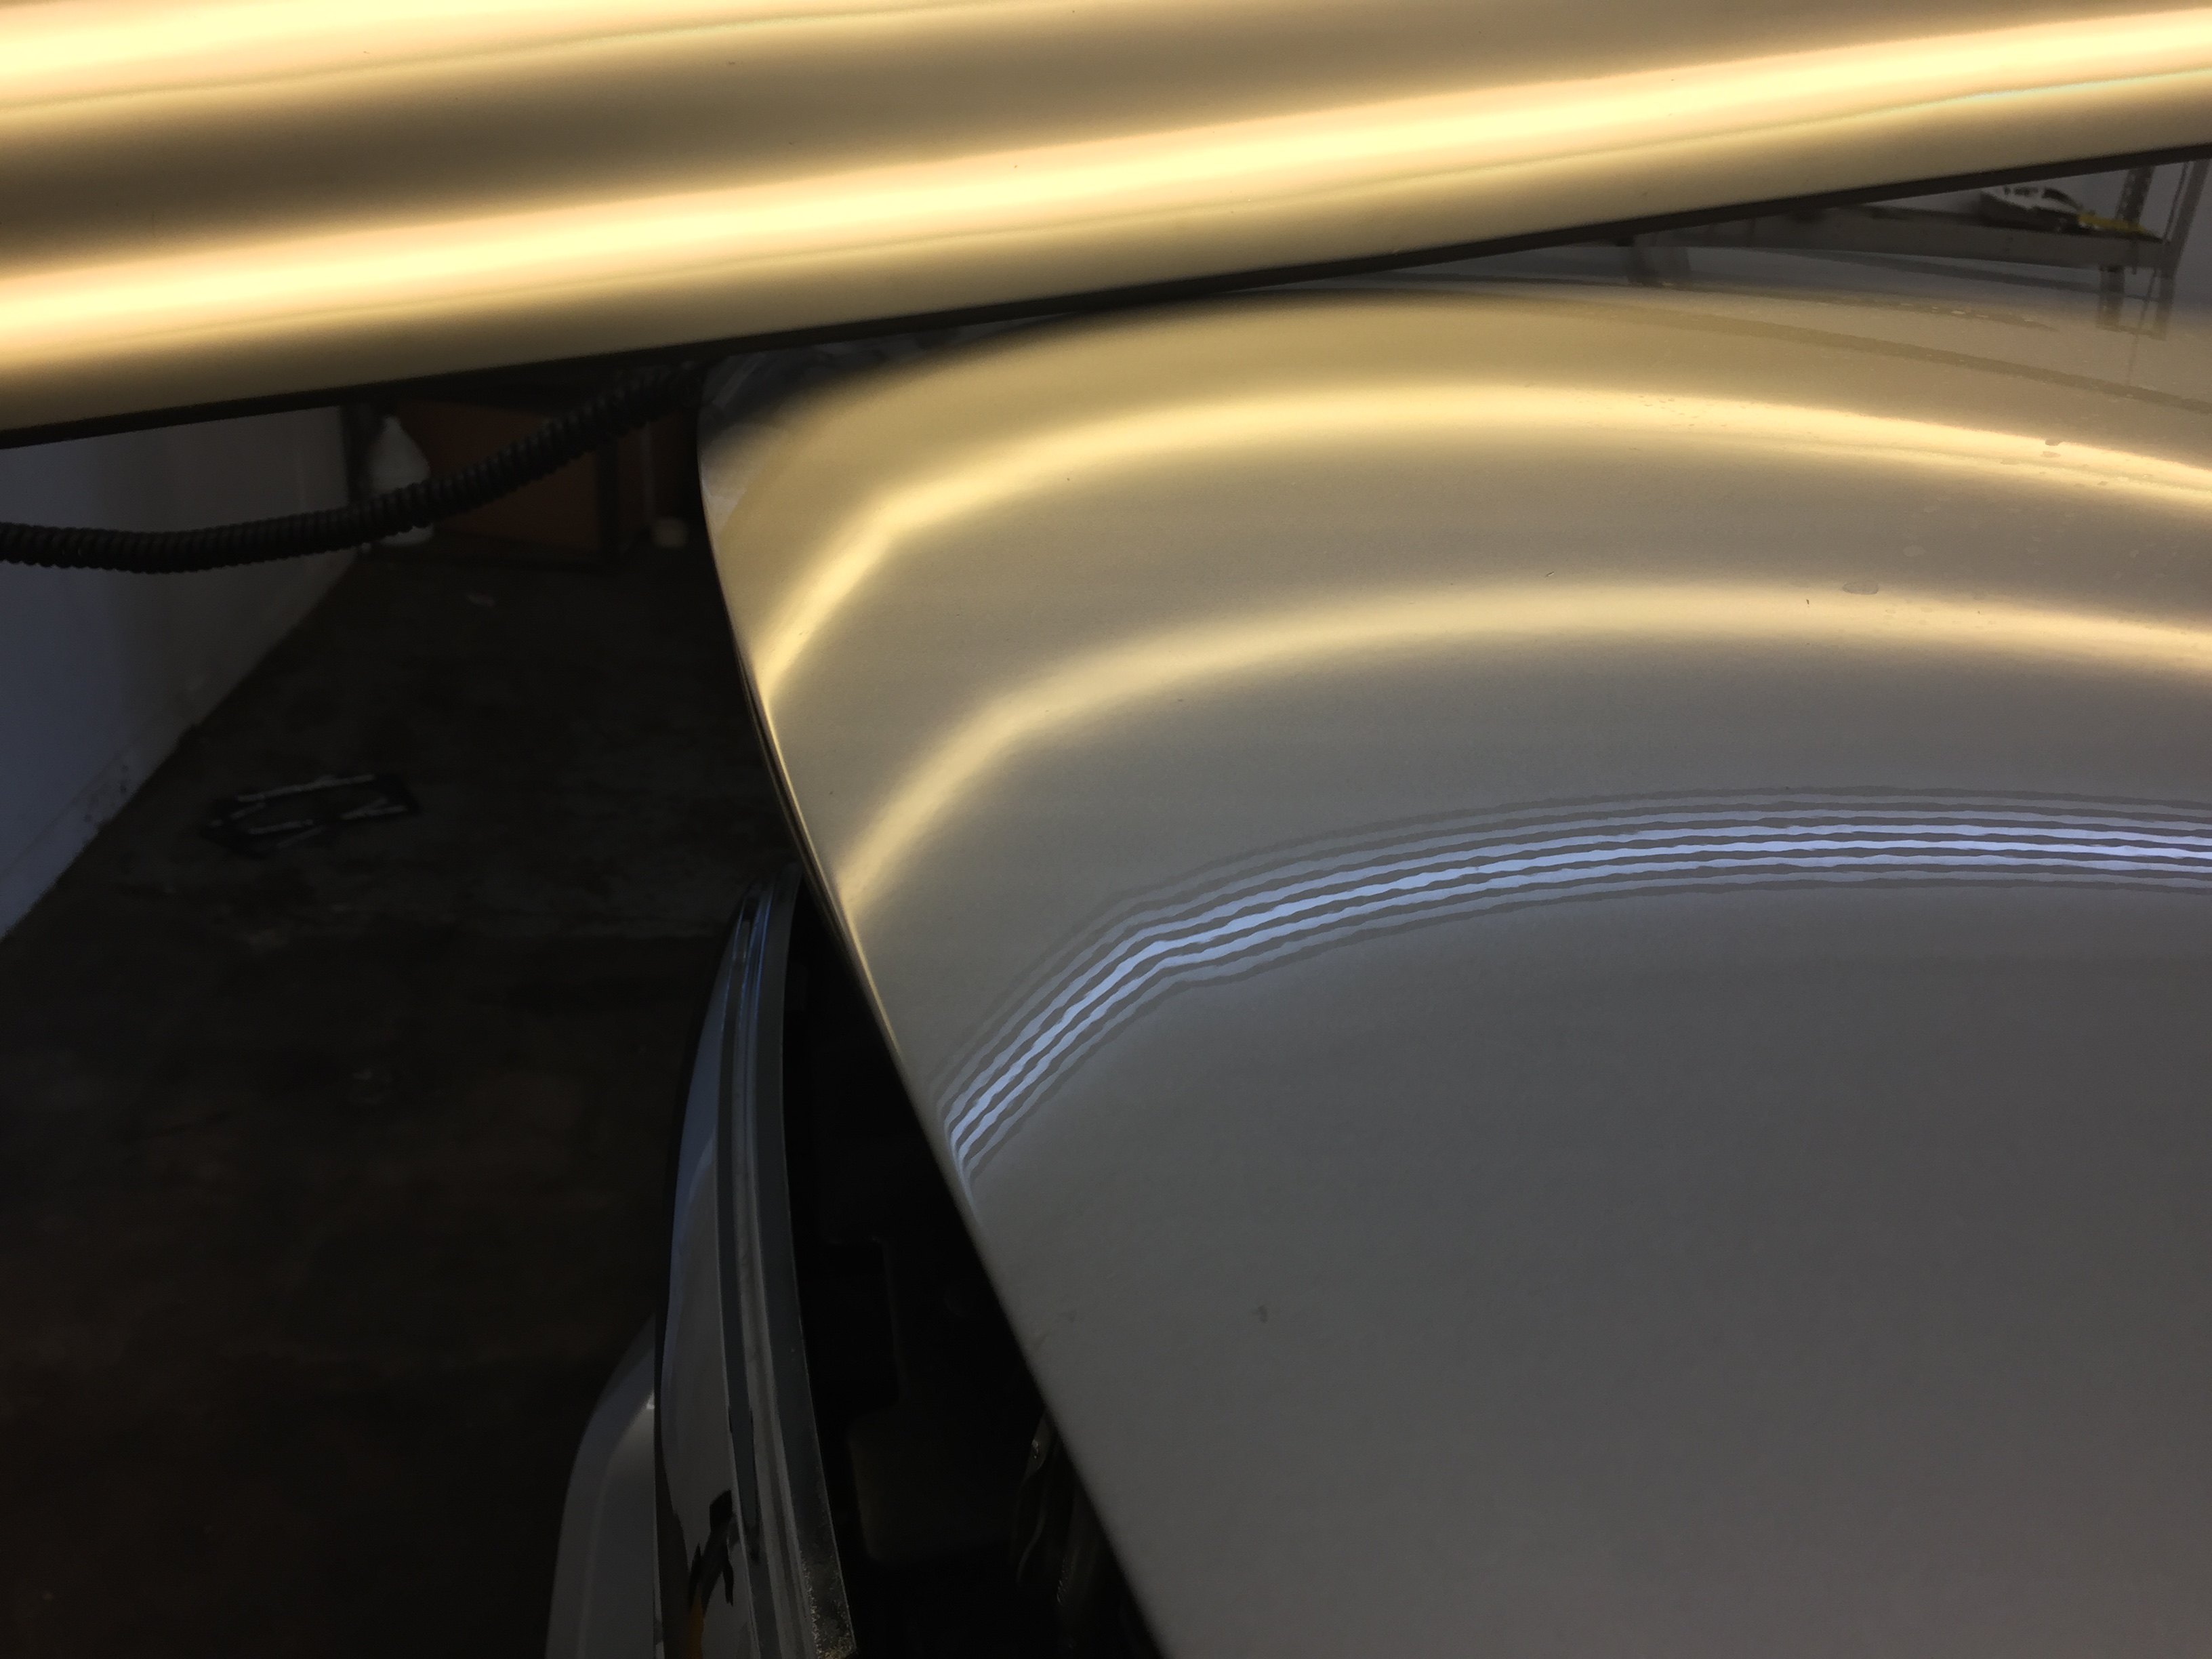 2015 Dodge Ram hail damage on hood, paintless dent repair, Springfield, IL. https://217dent.com by Michael Bocek